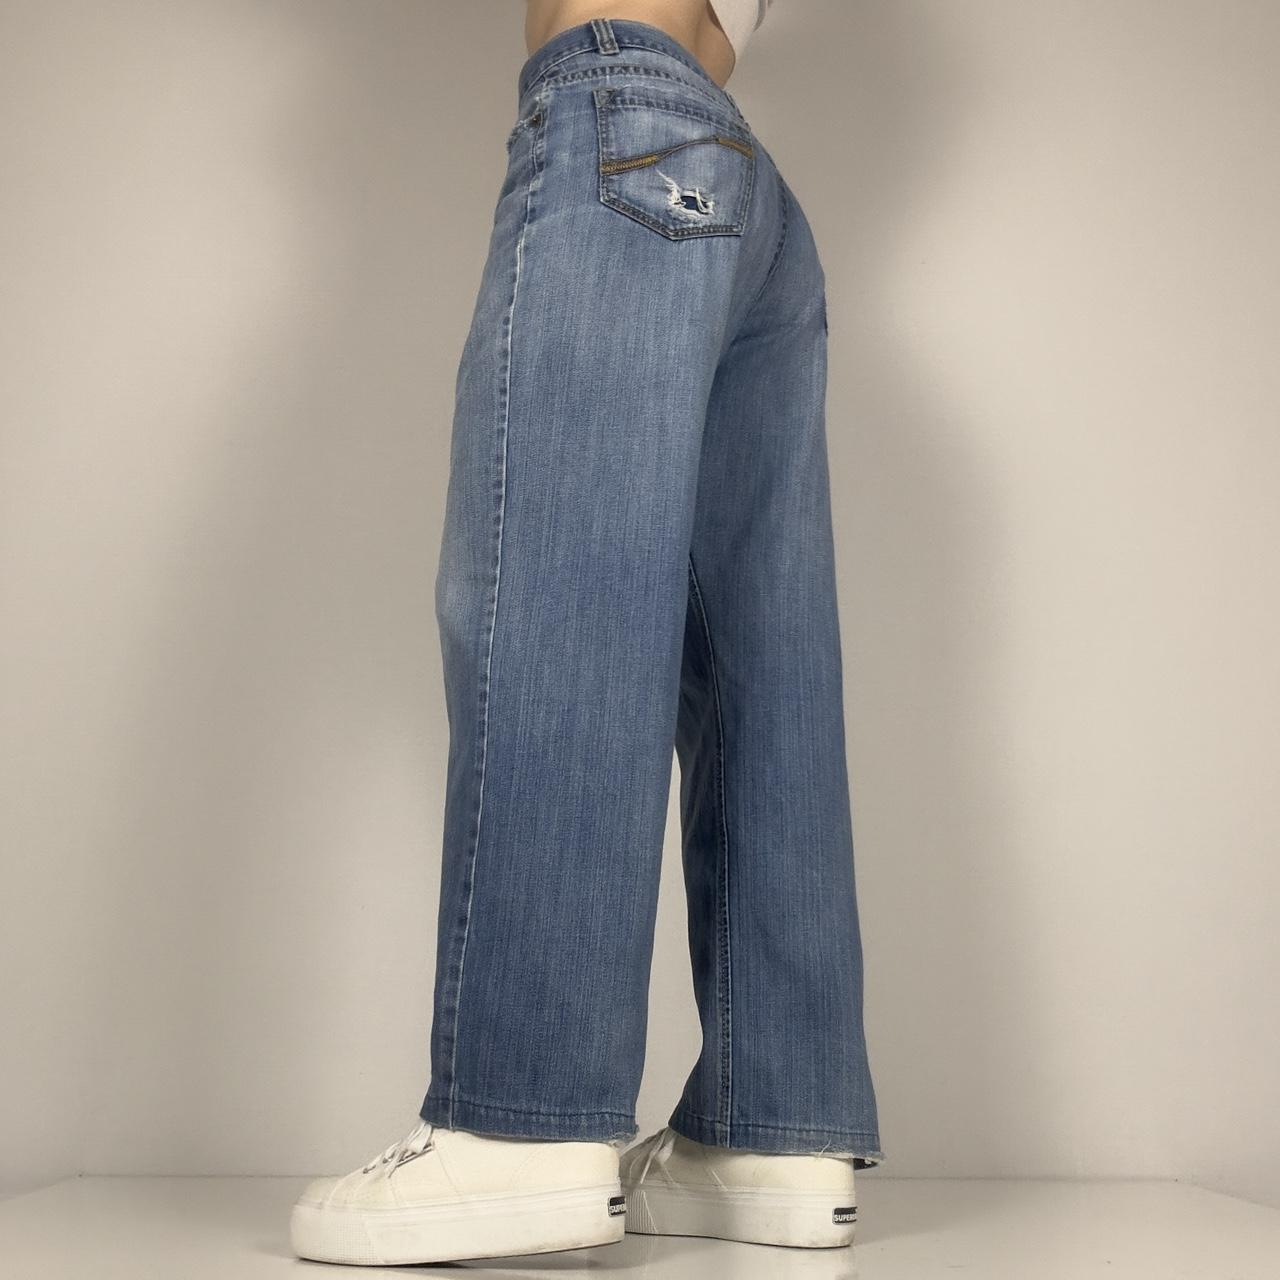 DKNY Men's Blue Jeans (4)